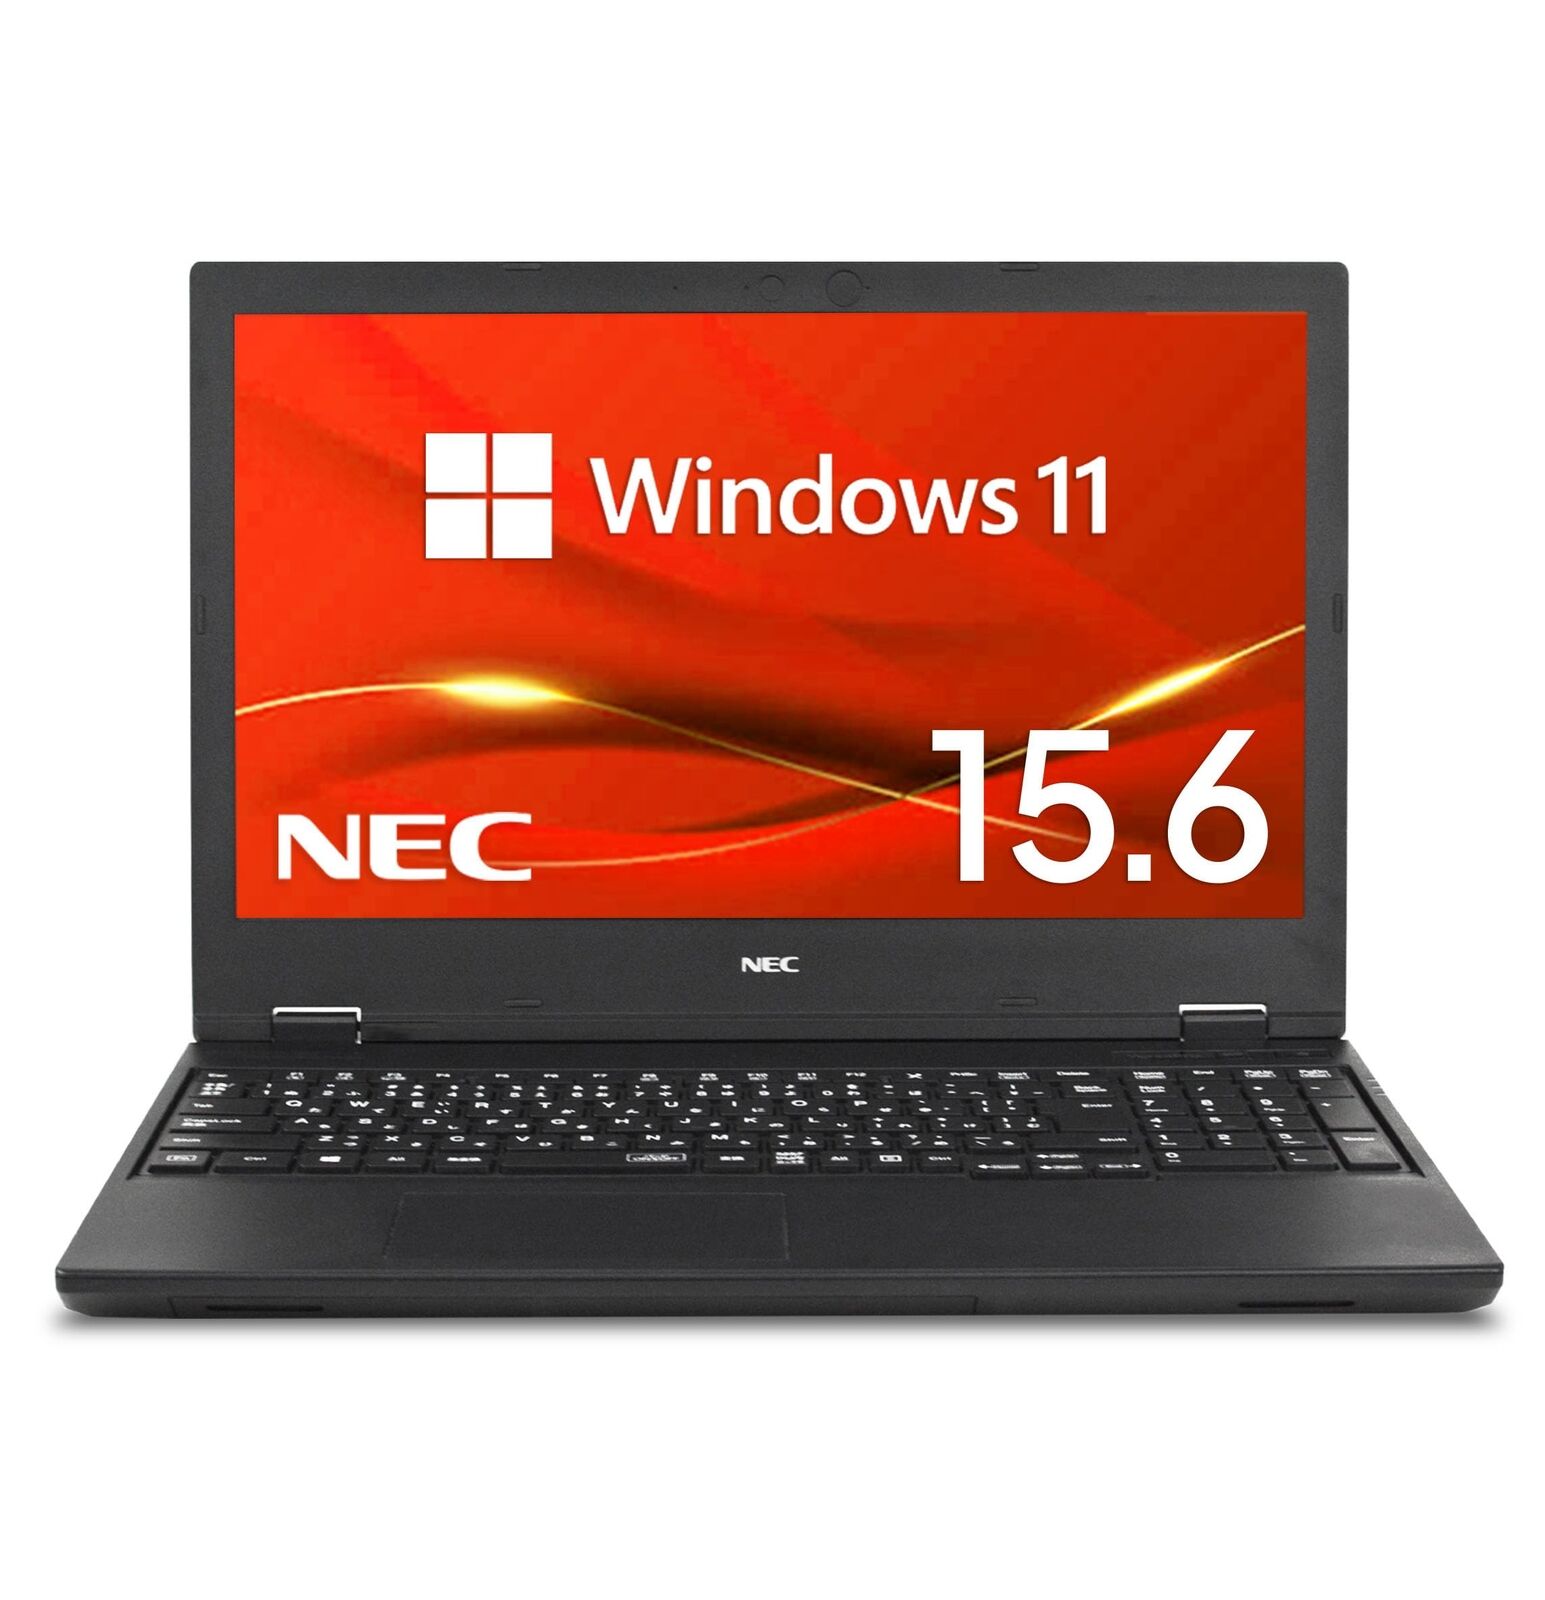 NEC VersaPro VK23TX / 15.6 type notebook PC / Win11 / MS Office 2019 / CPU: 6th